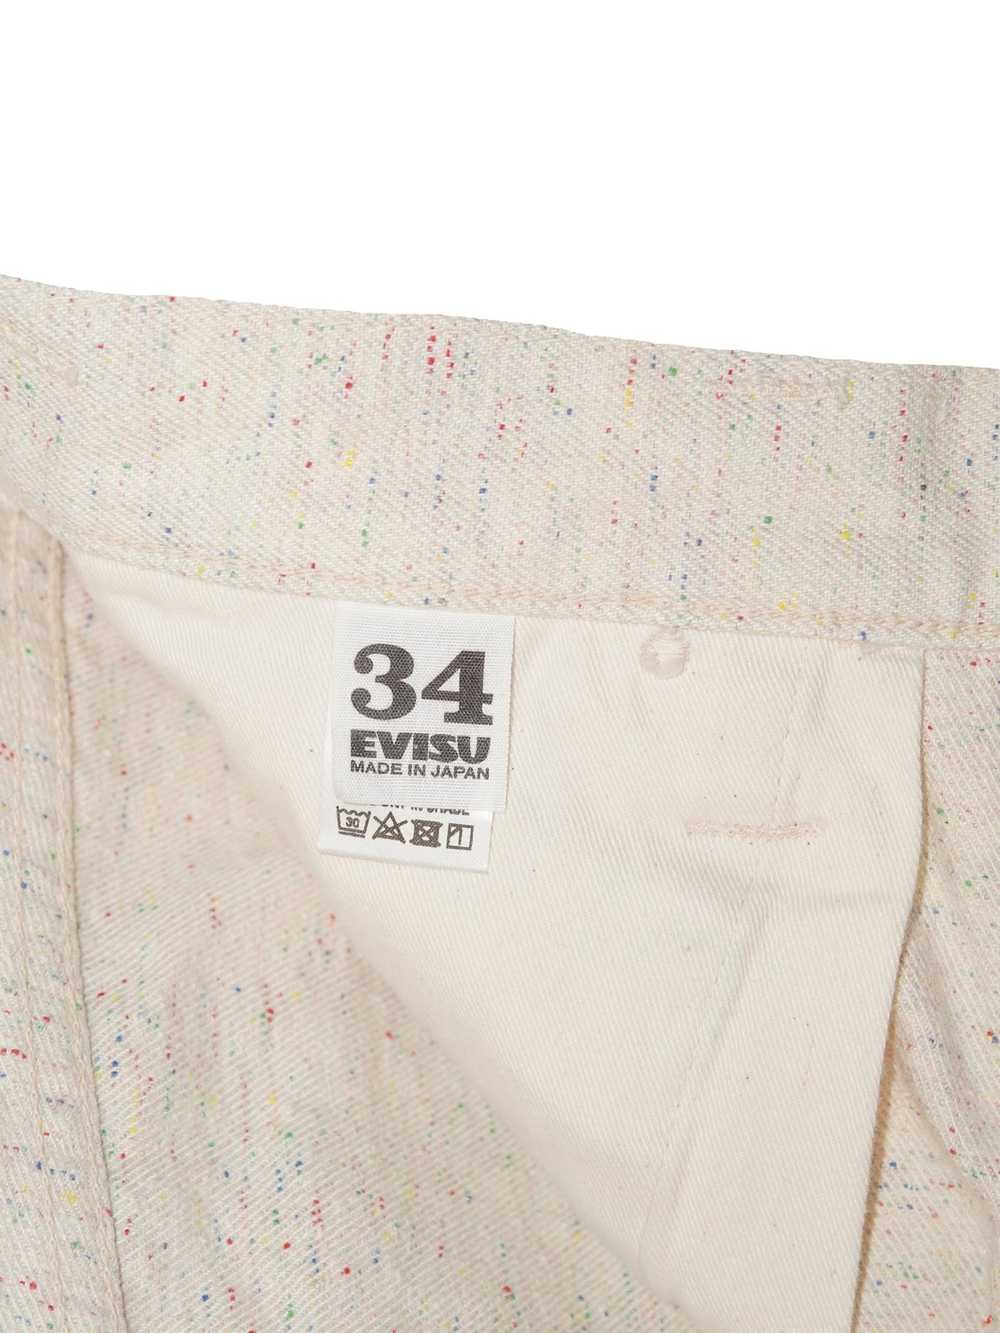 Evisu Multicolor Tweed White Denim Jeans Pants - image 8